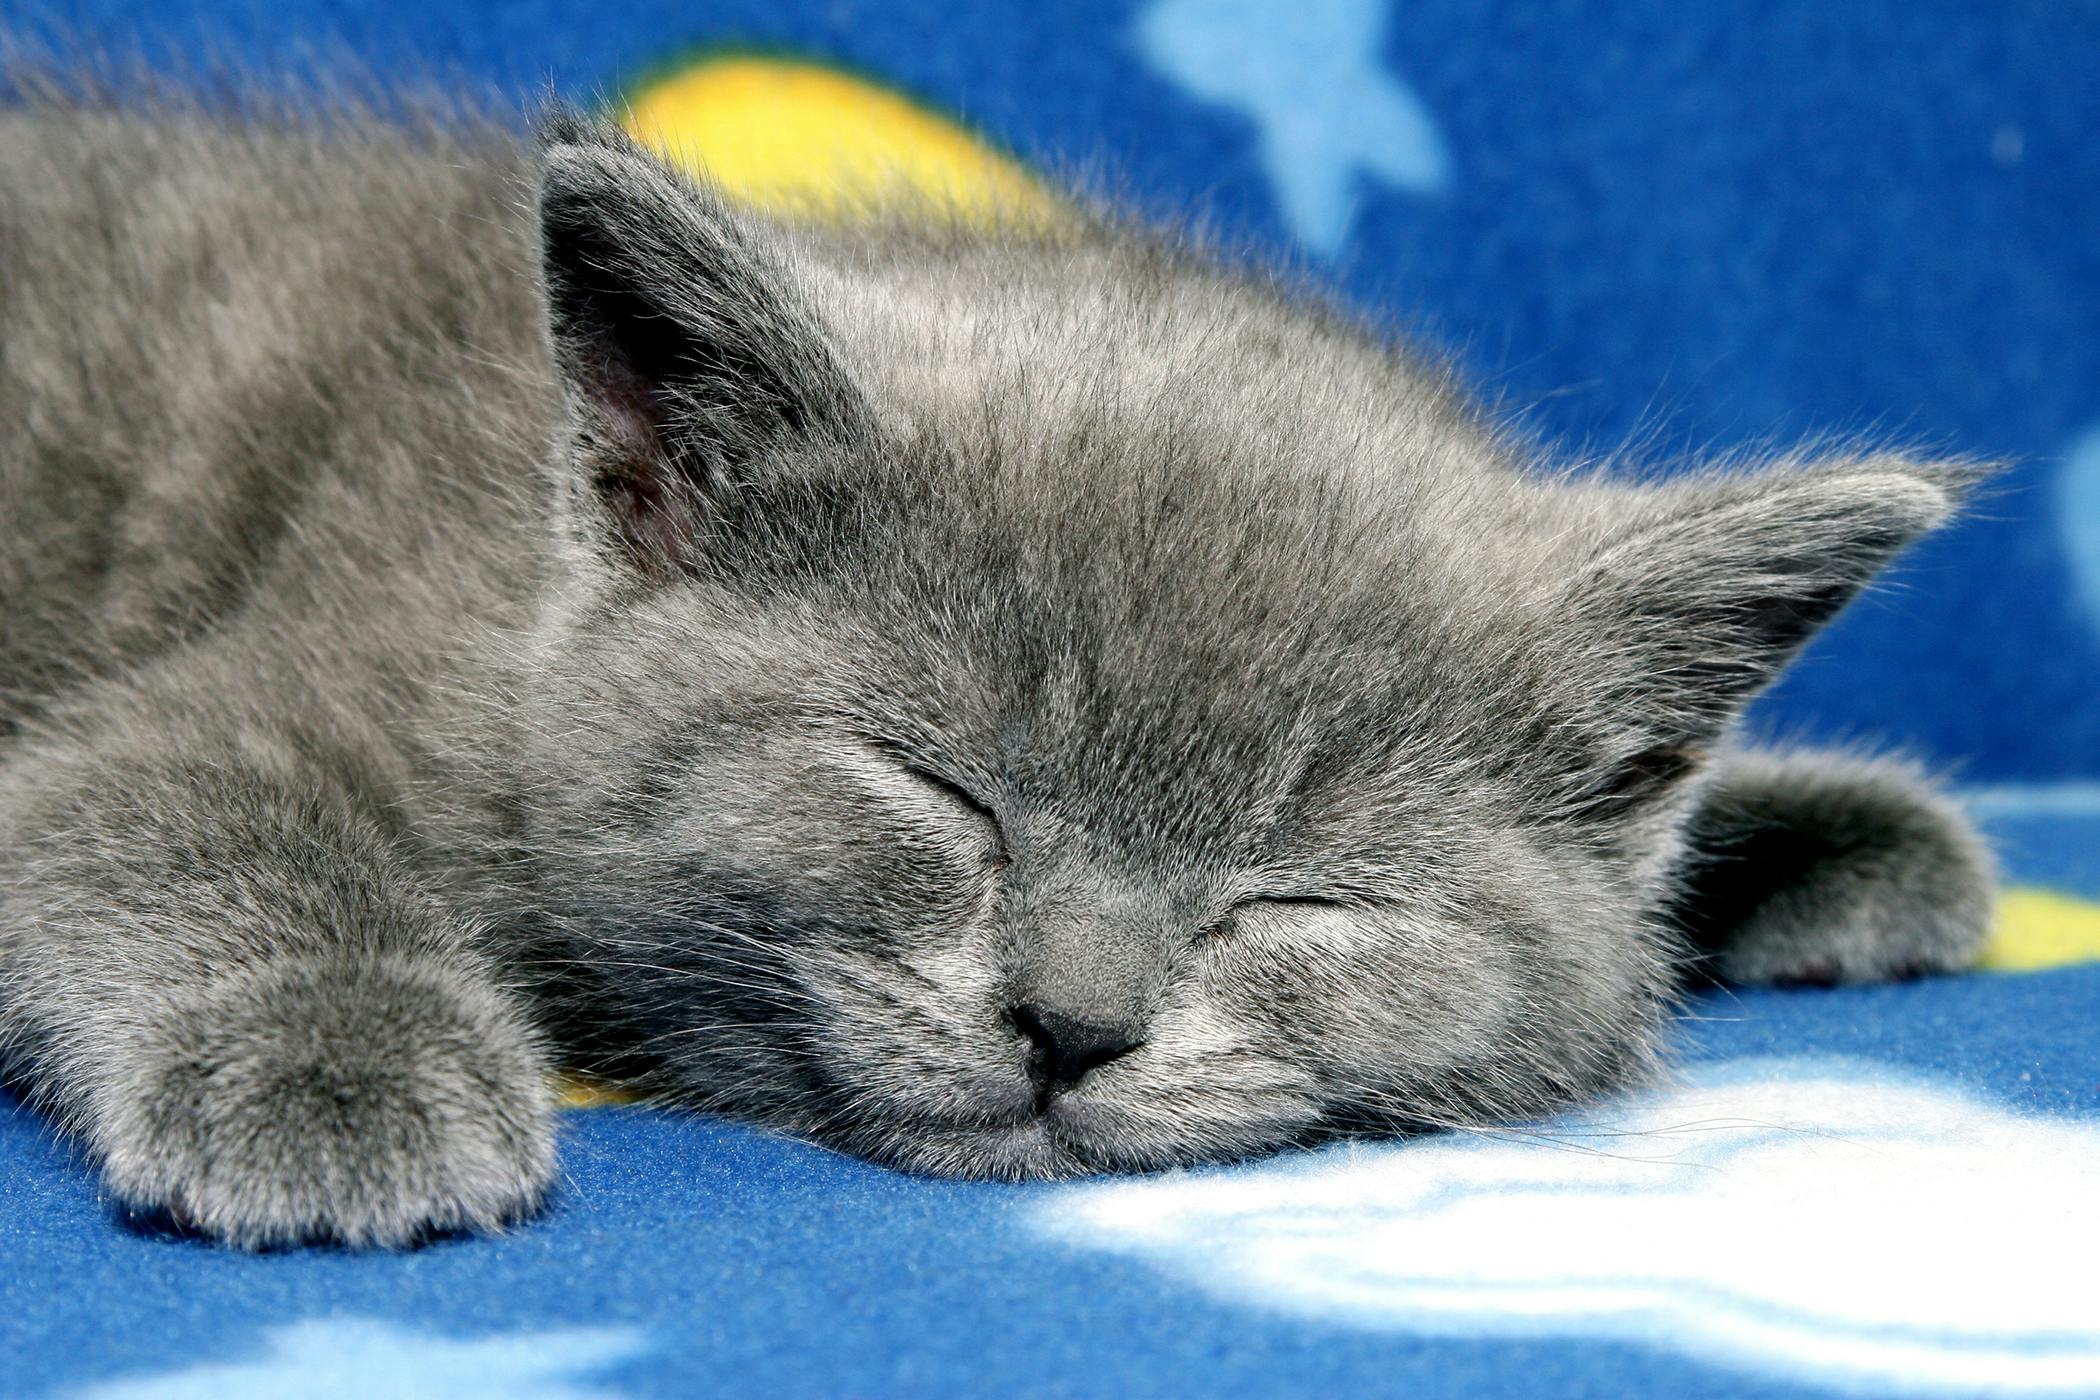 Спи спокойно родина моя. Спокойной ночи котики. Спокойной ночи с кошками. Спящие котята. Сладких снов котик.